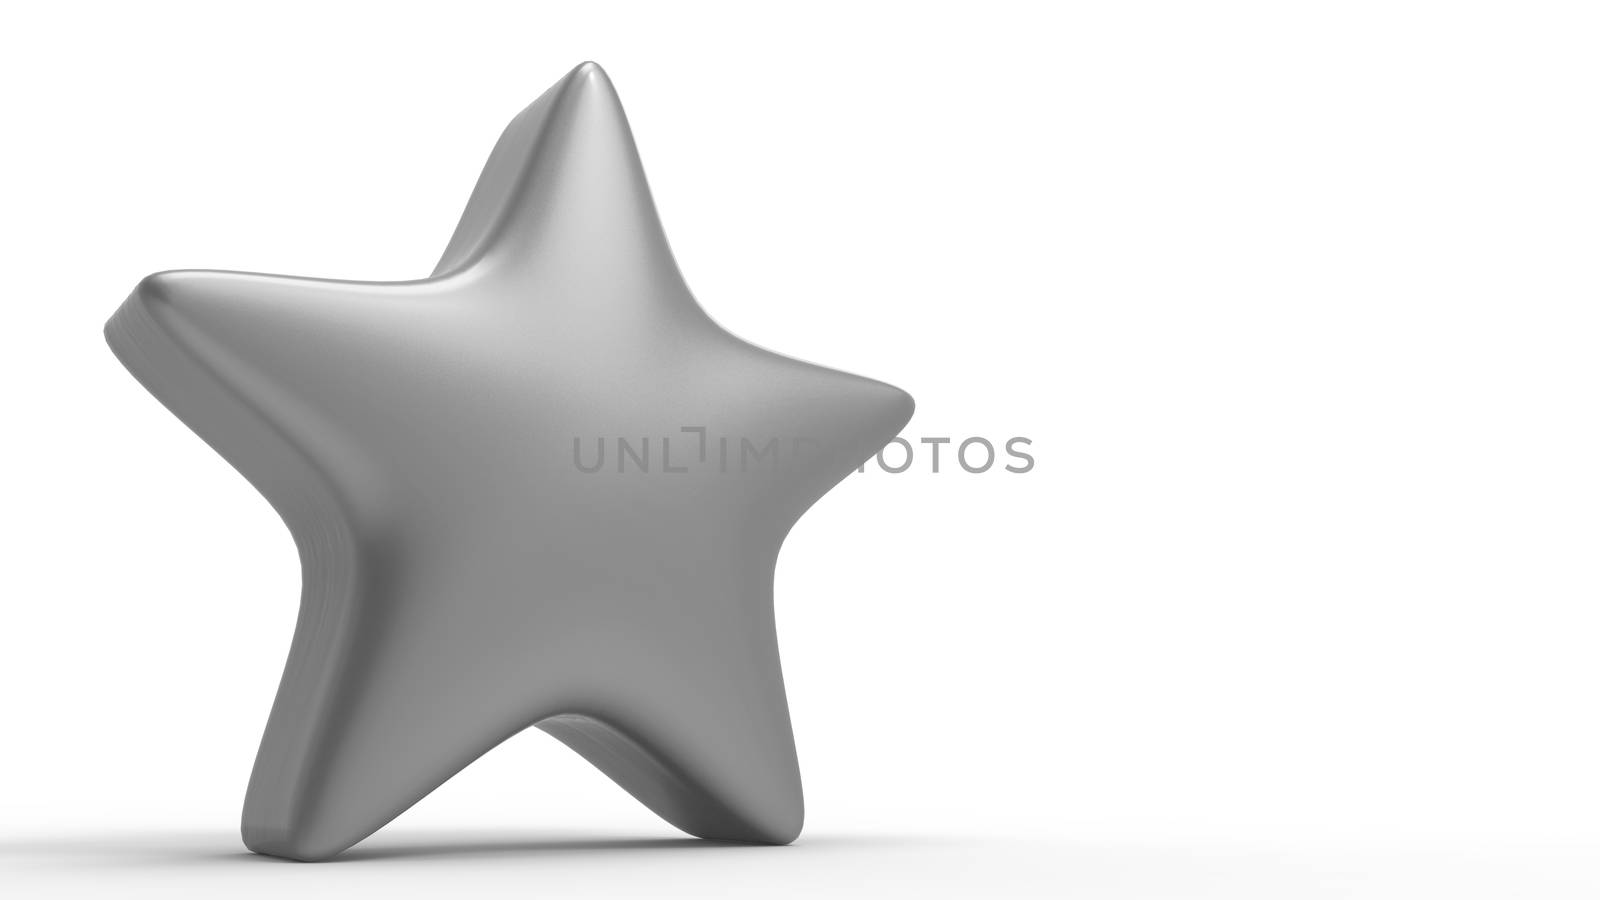 3d gray star on color background. Render and illustration of golden star for premium